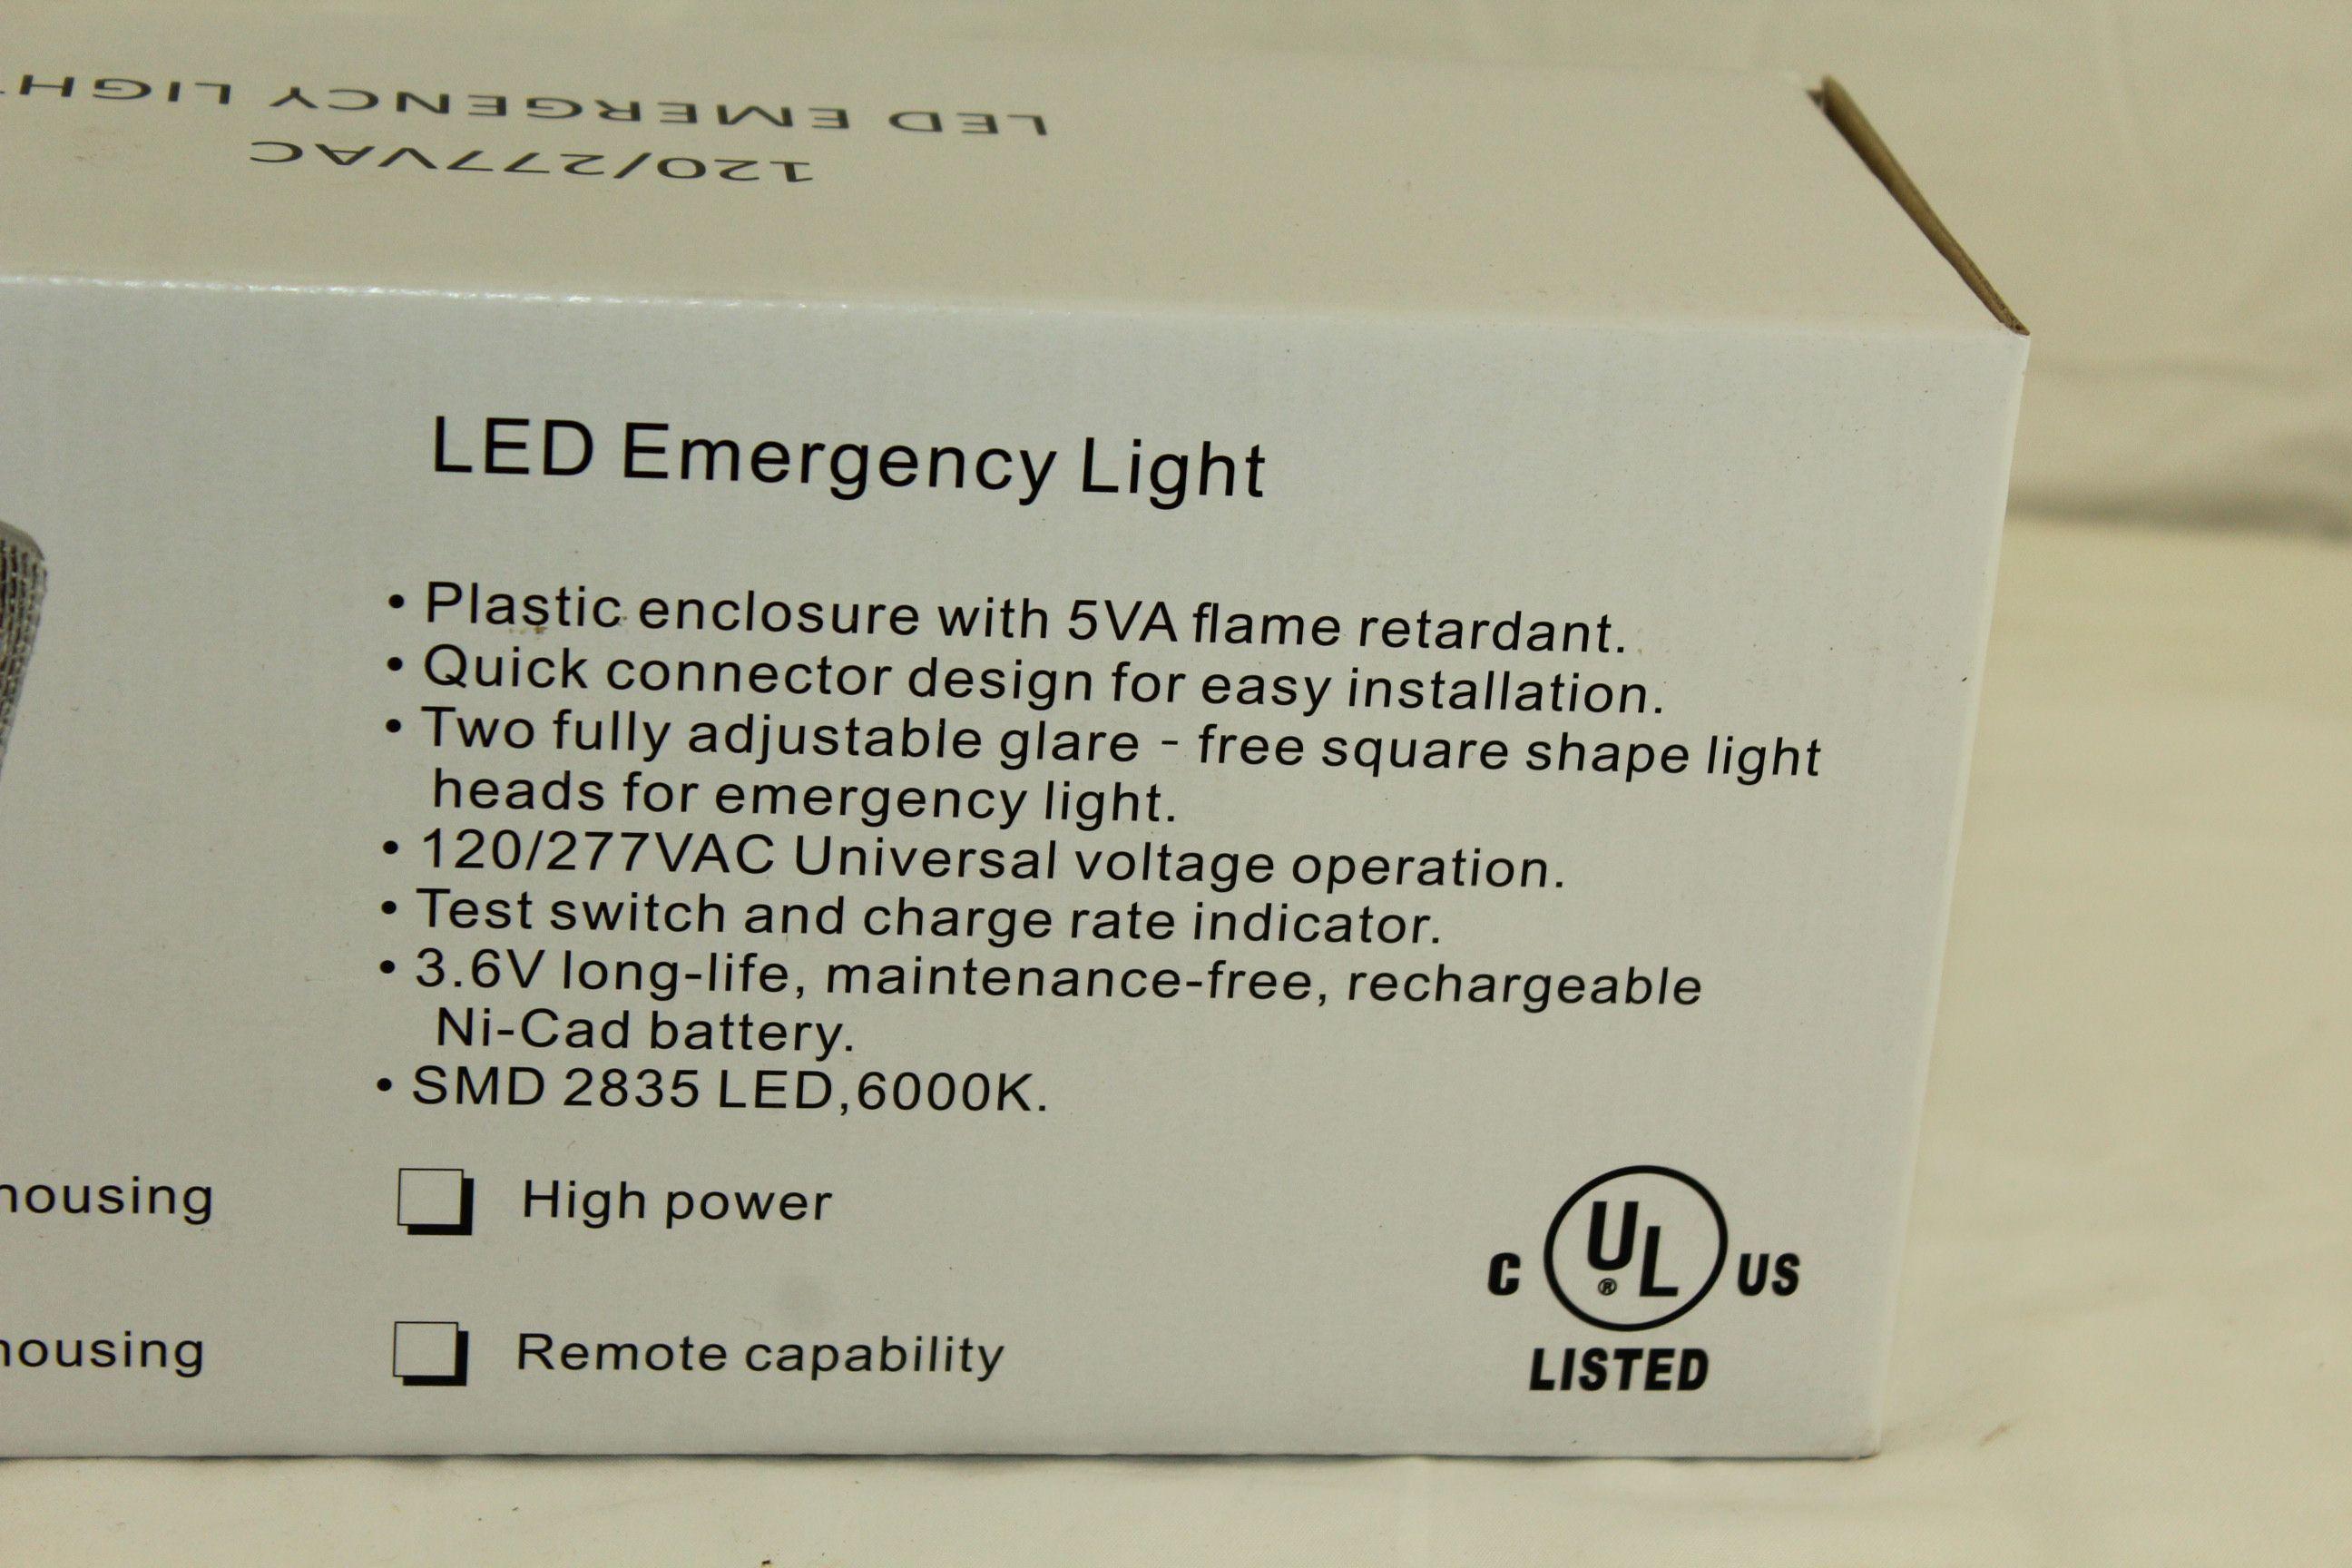 LED Emergency Light.  New!